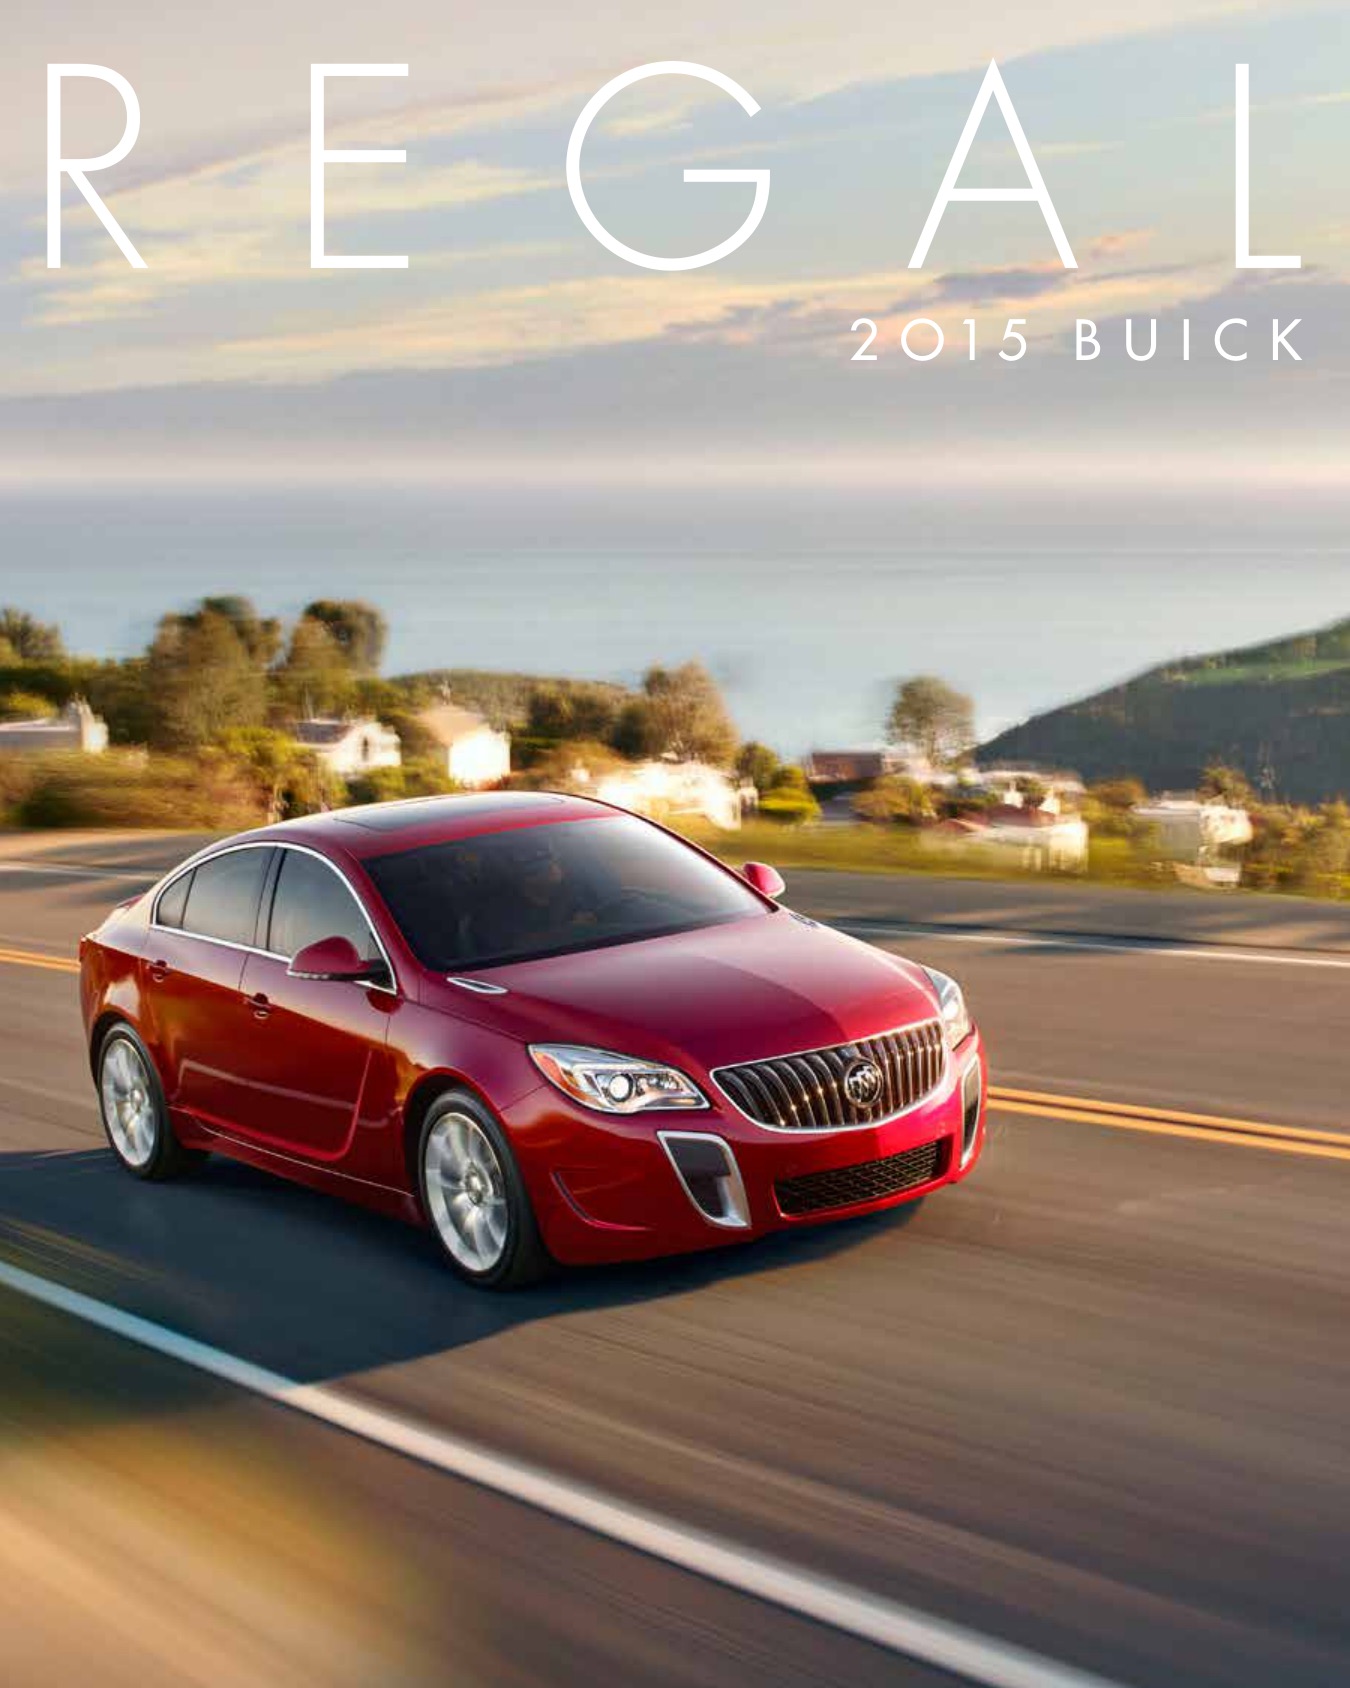 2015 Buick Regal Brochure Page 11